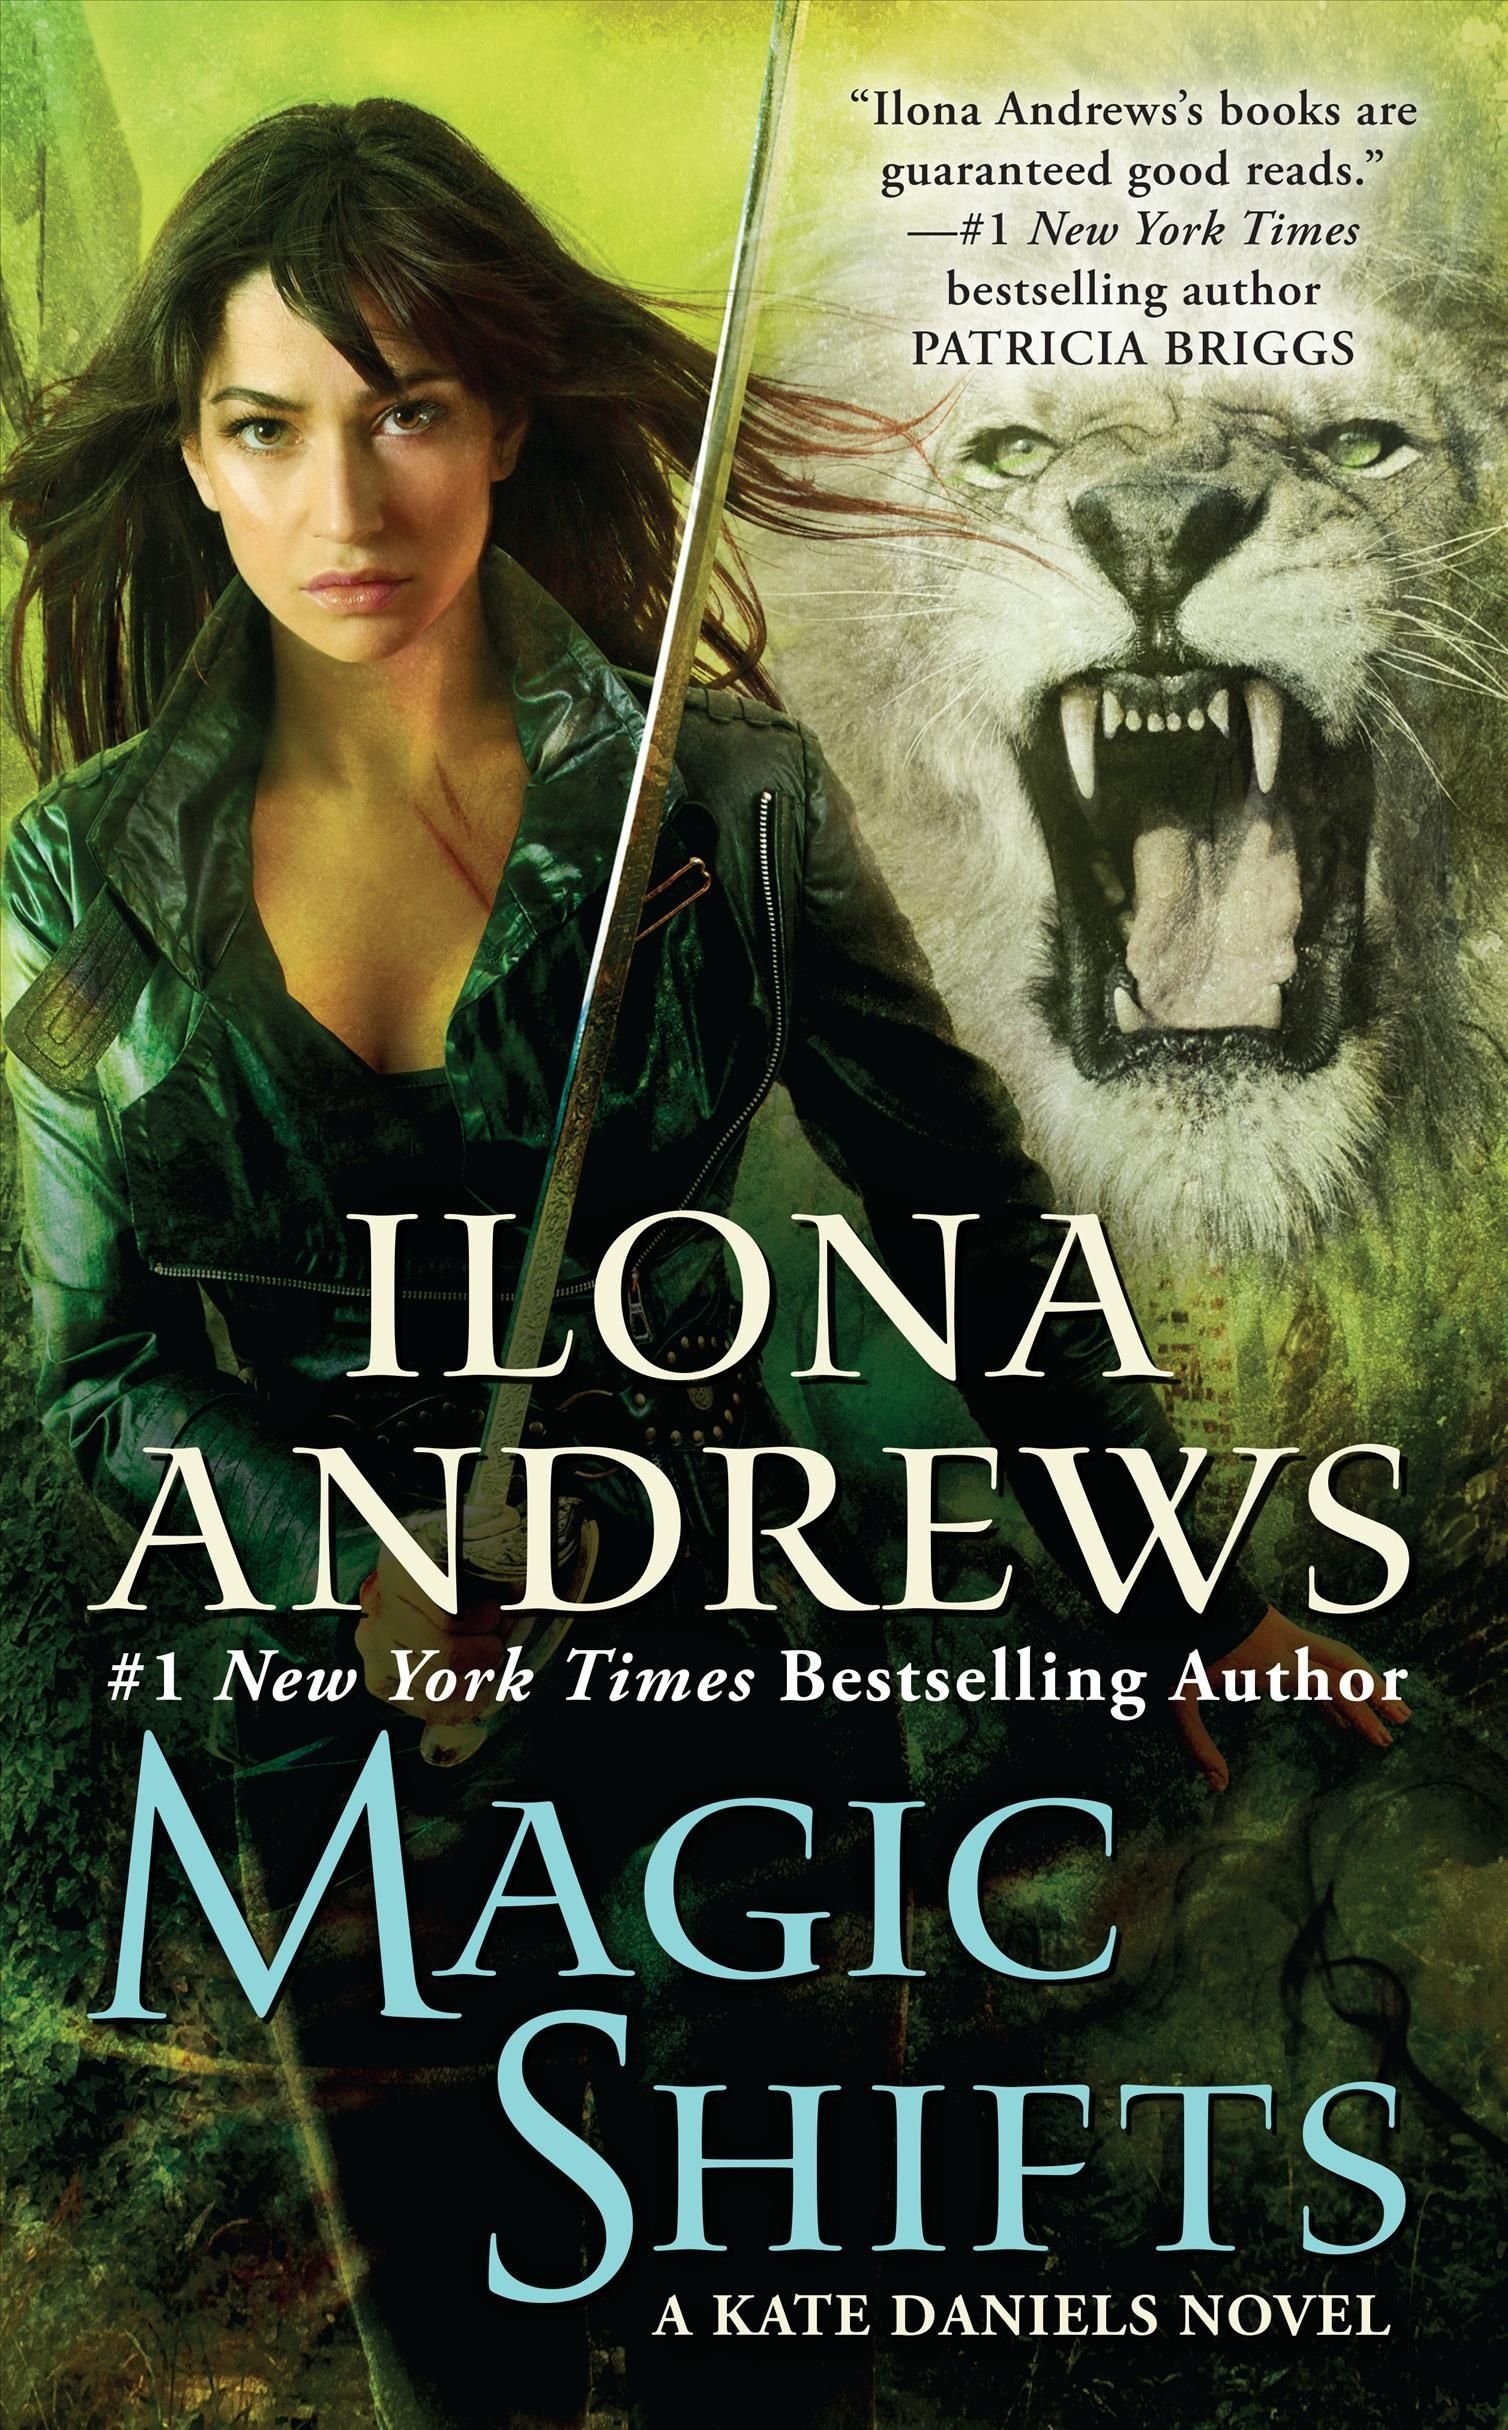 Magic Triumphs by Ilona Andrews